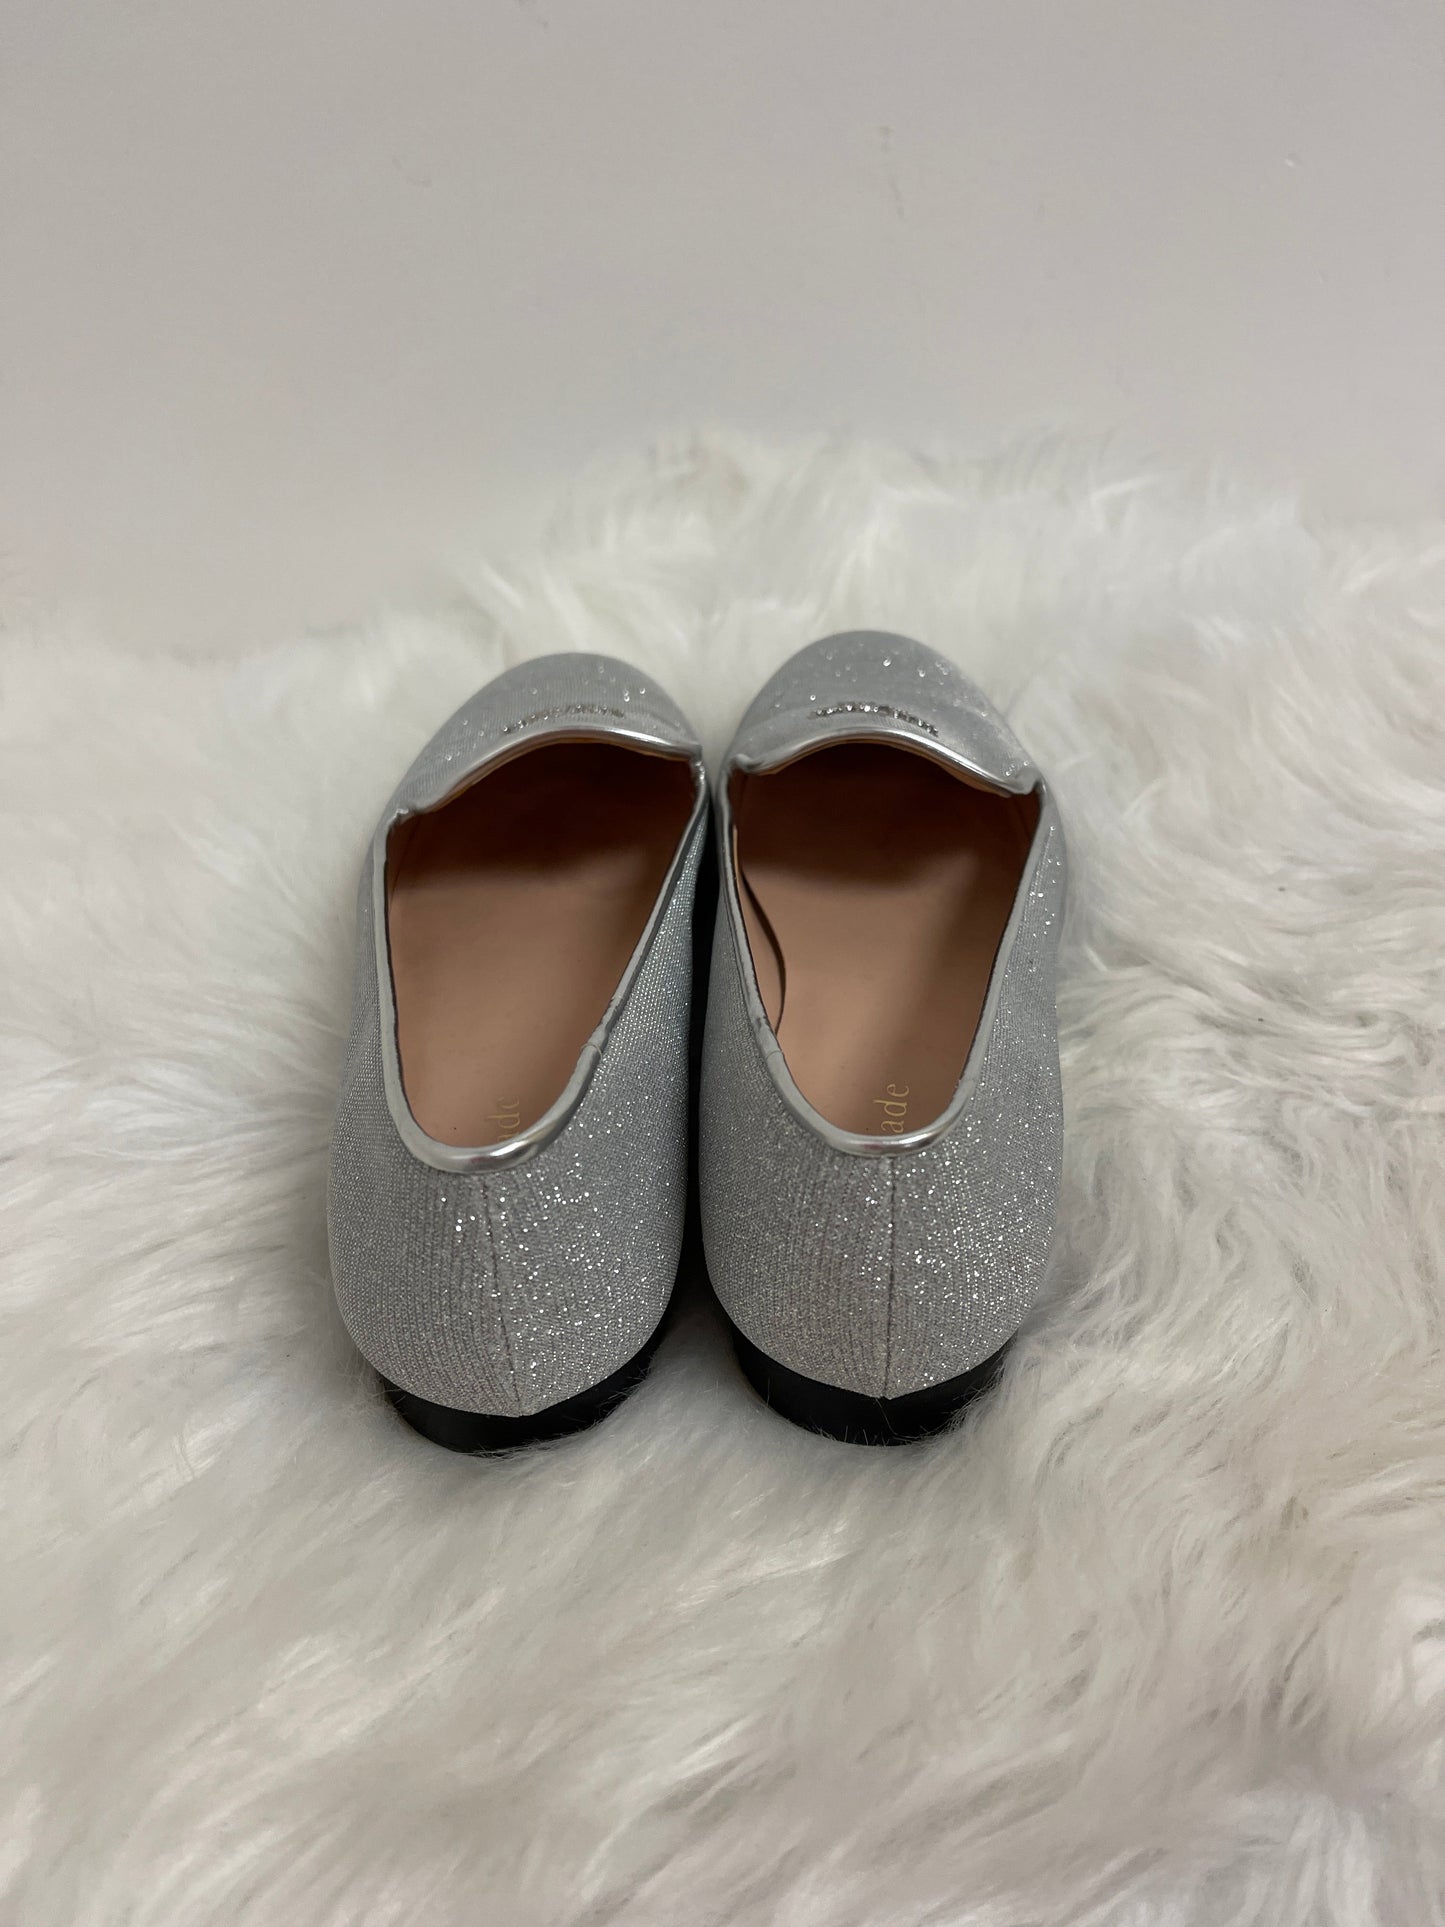 Silver Shoes Designer Kate Spade, Size 7.5